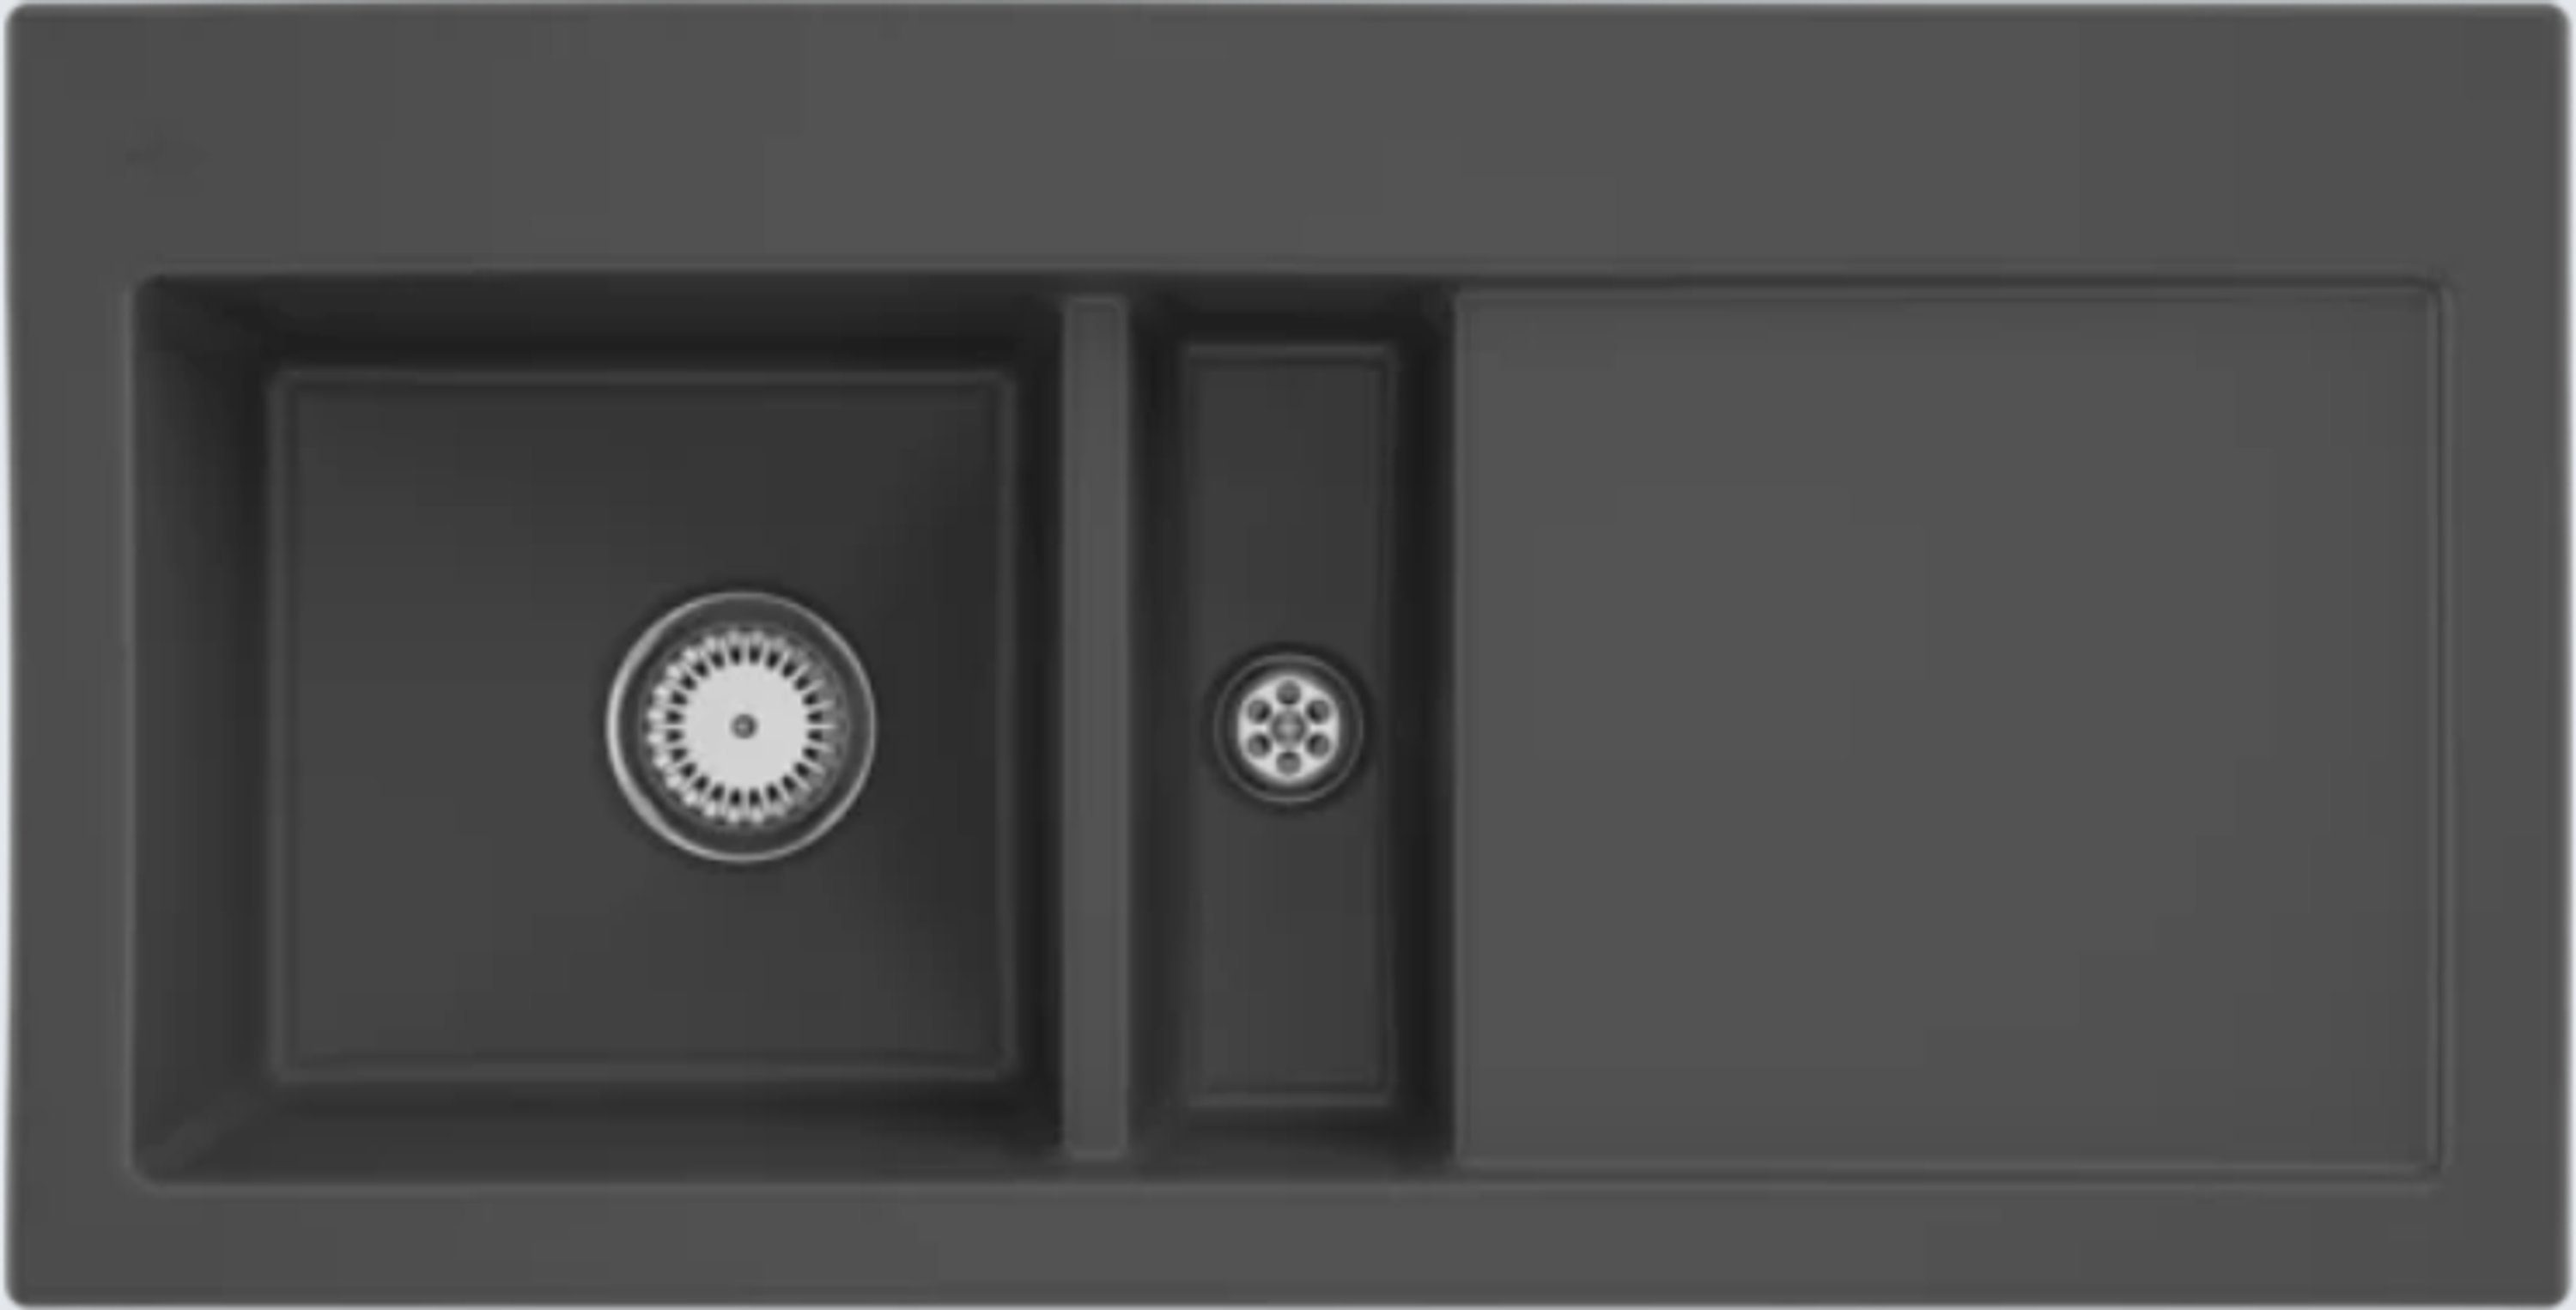 Villeroy & Boch Küchenspüle 6770 01 i4, Rechteckig, 100/22 cm, Geschmacksmuster geschützt, Becken links und rechts möglich